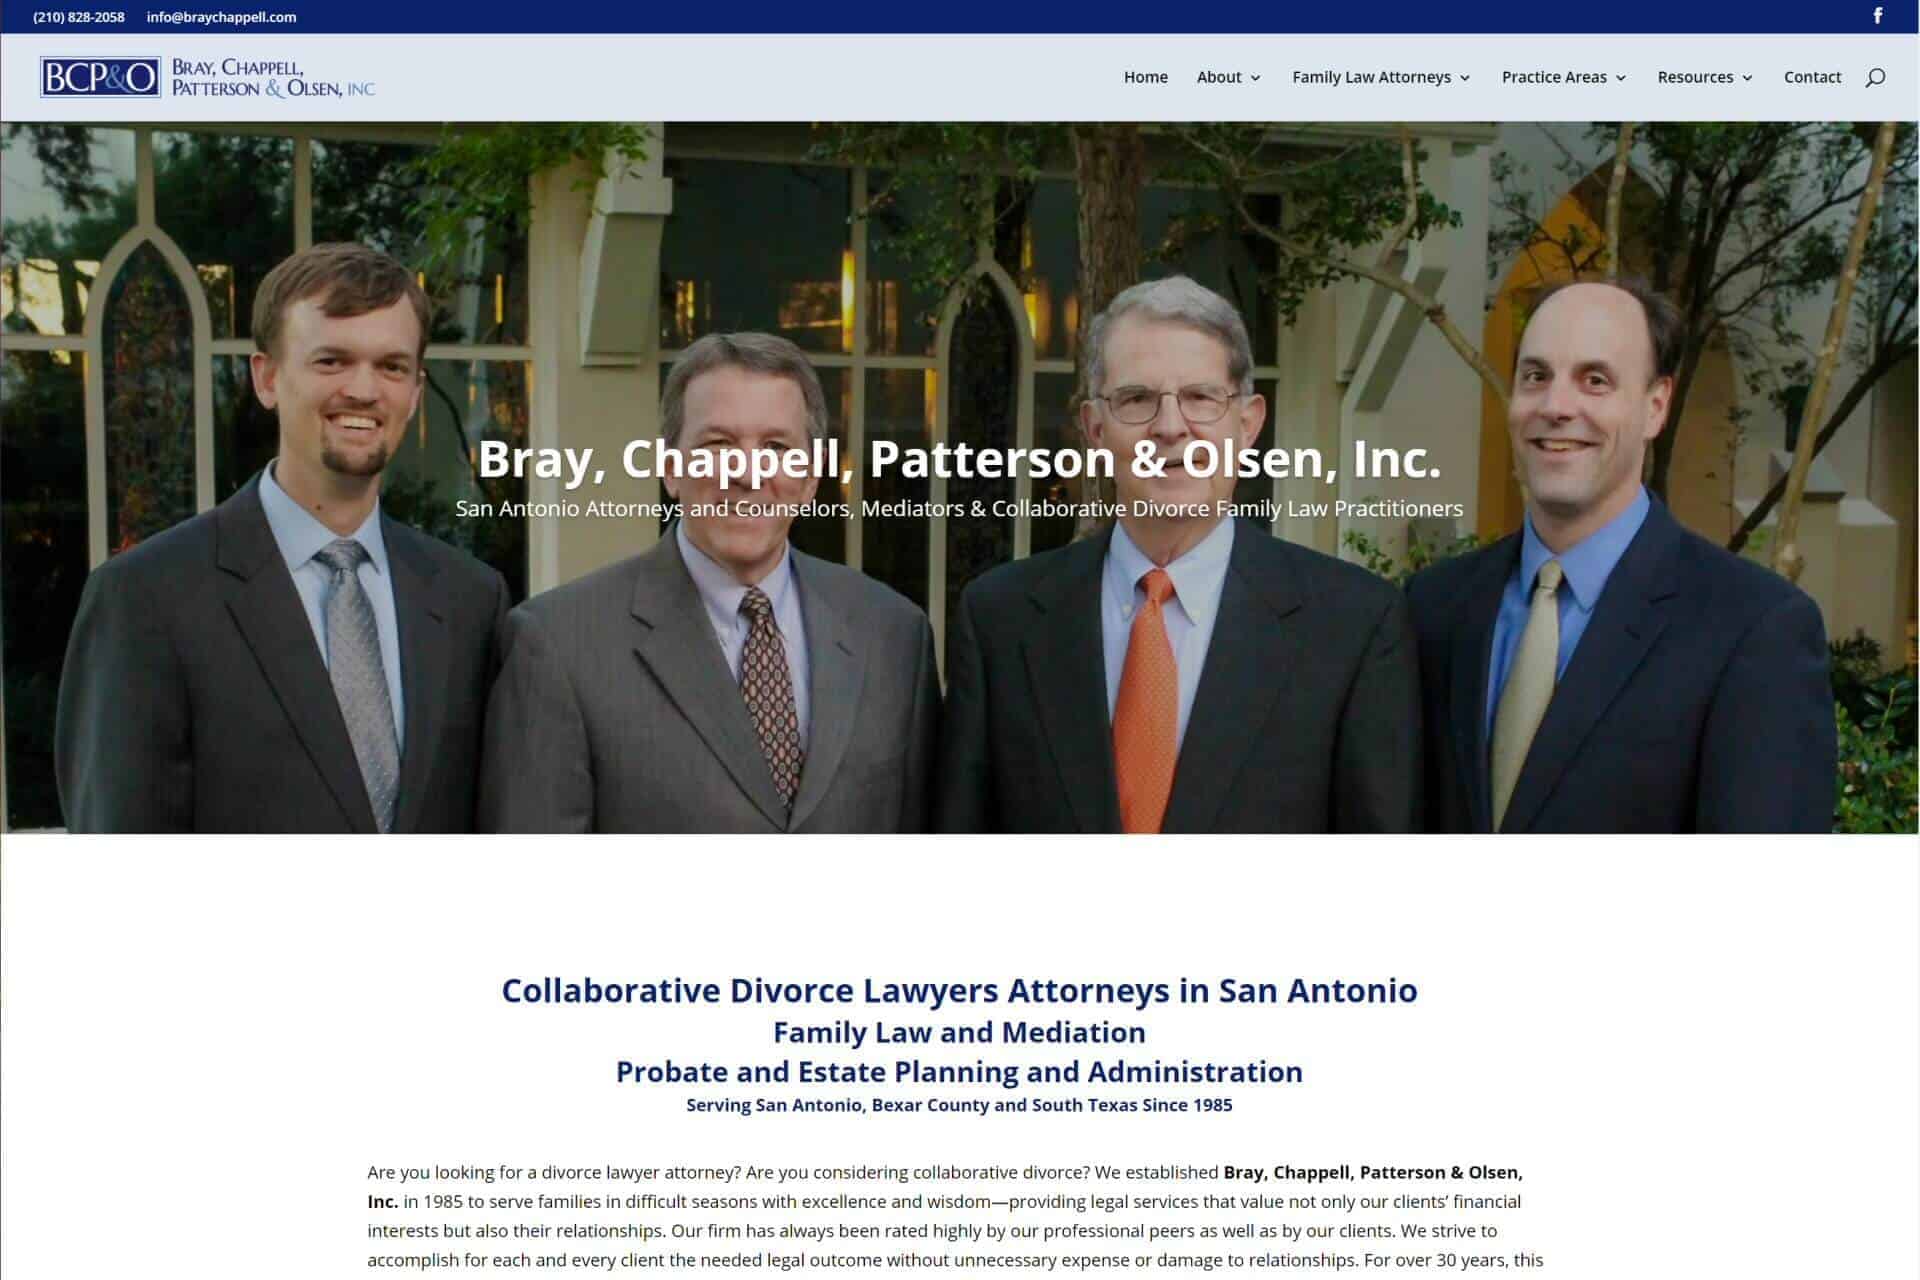 Bray, Chappell, Patterson & Olsen, Inc. by A & B Gunite